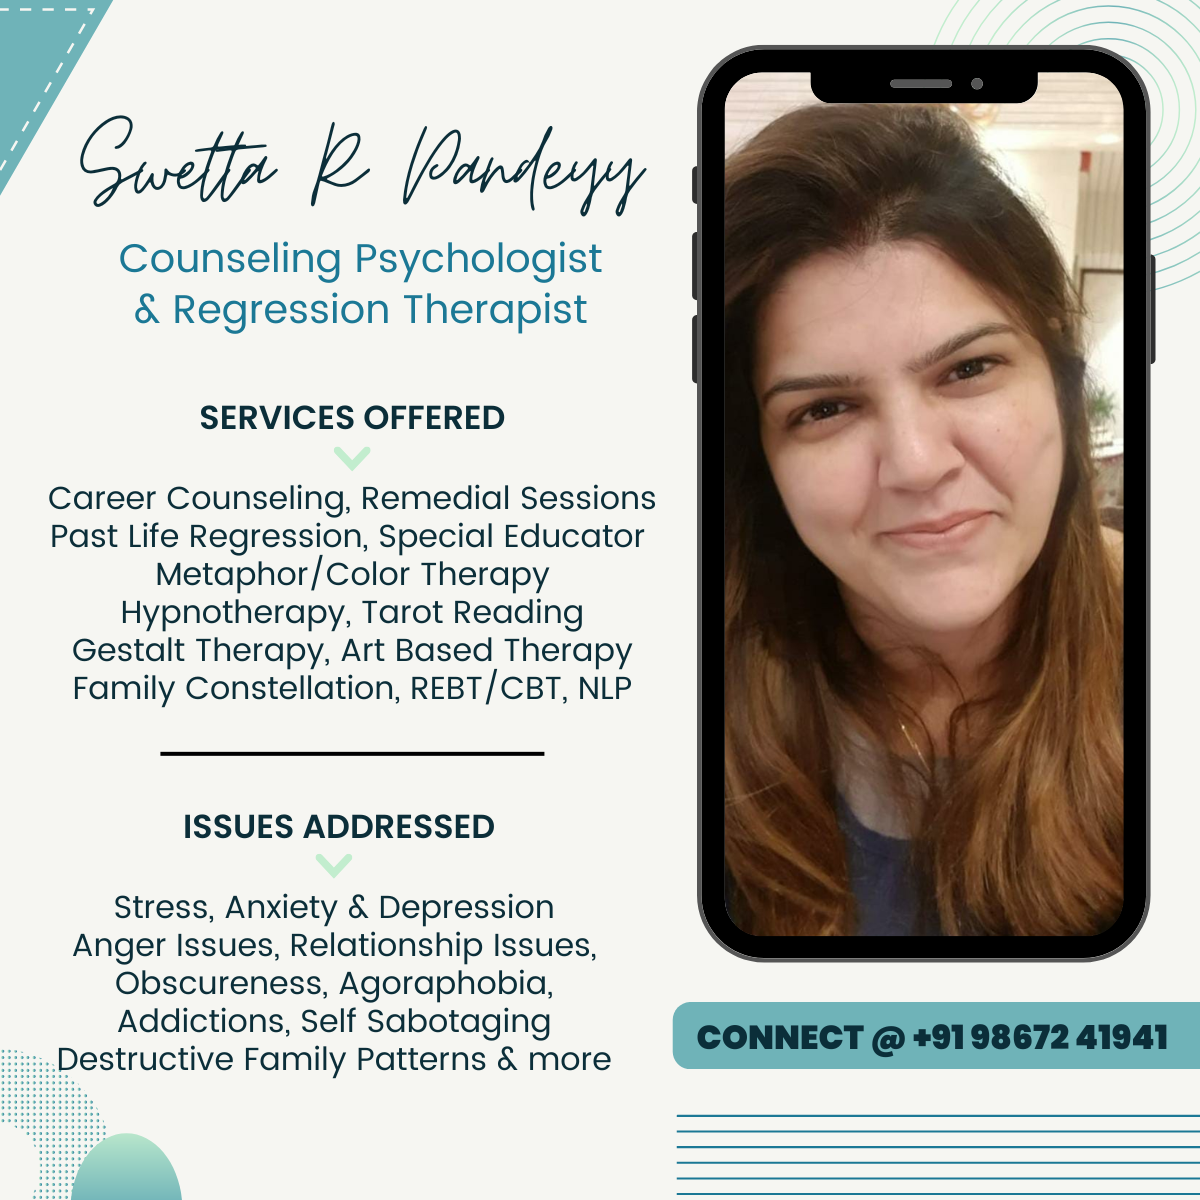 Sweta R Pandey - Counselling Psychologist & Regression Therapist- Nashik